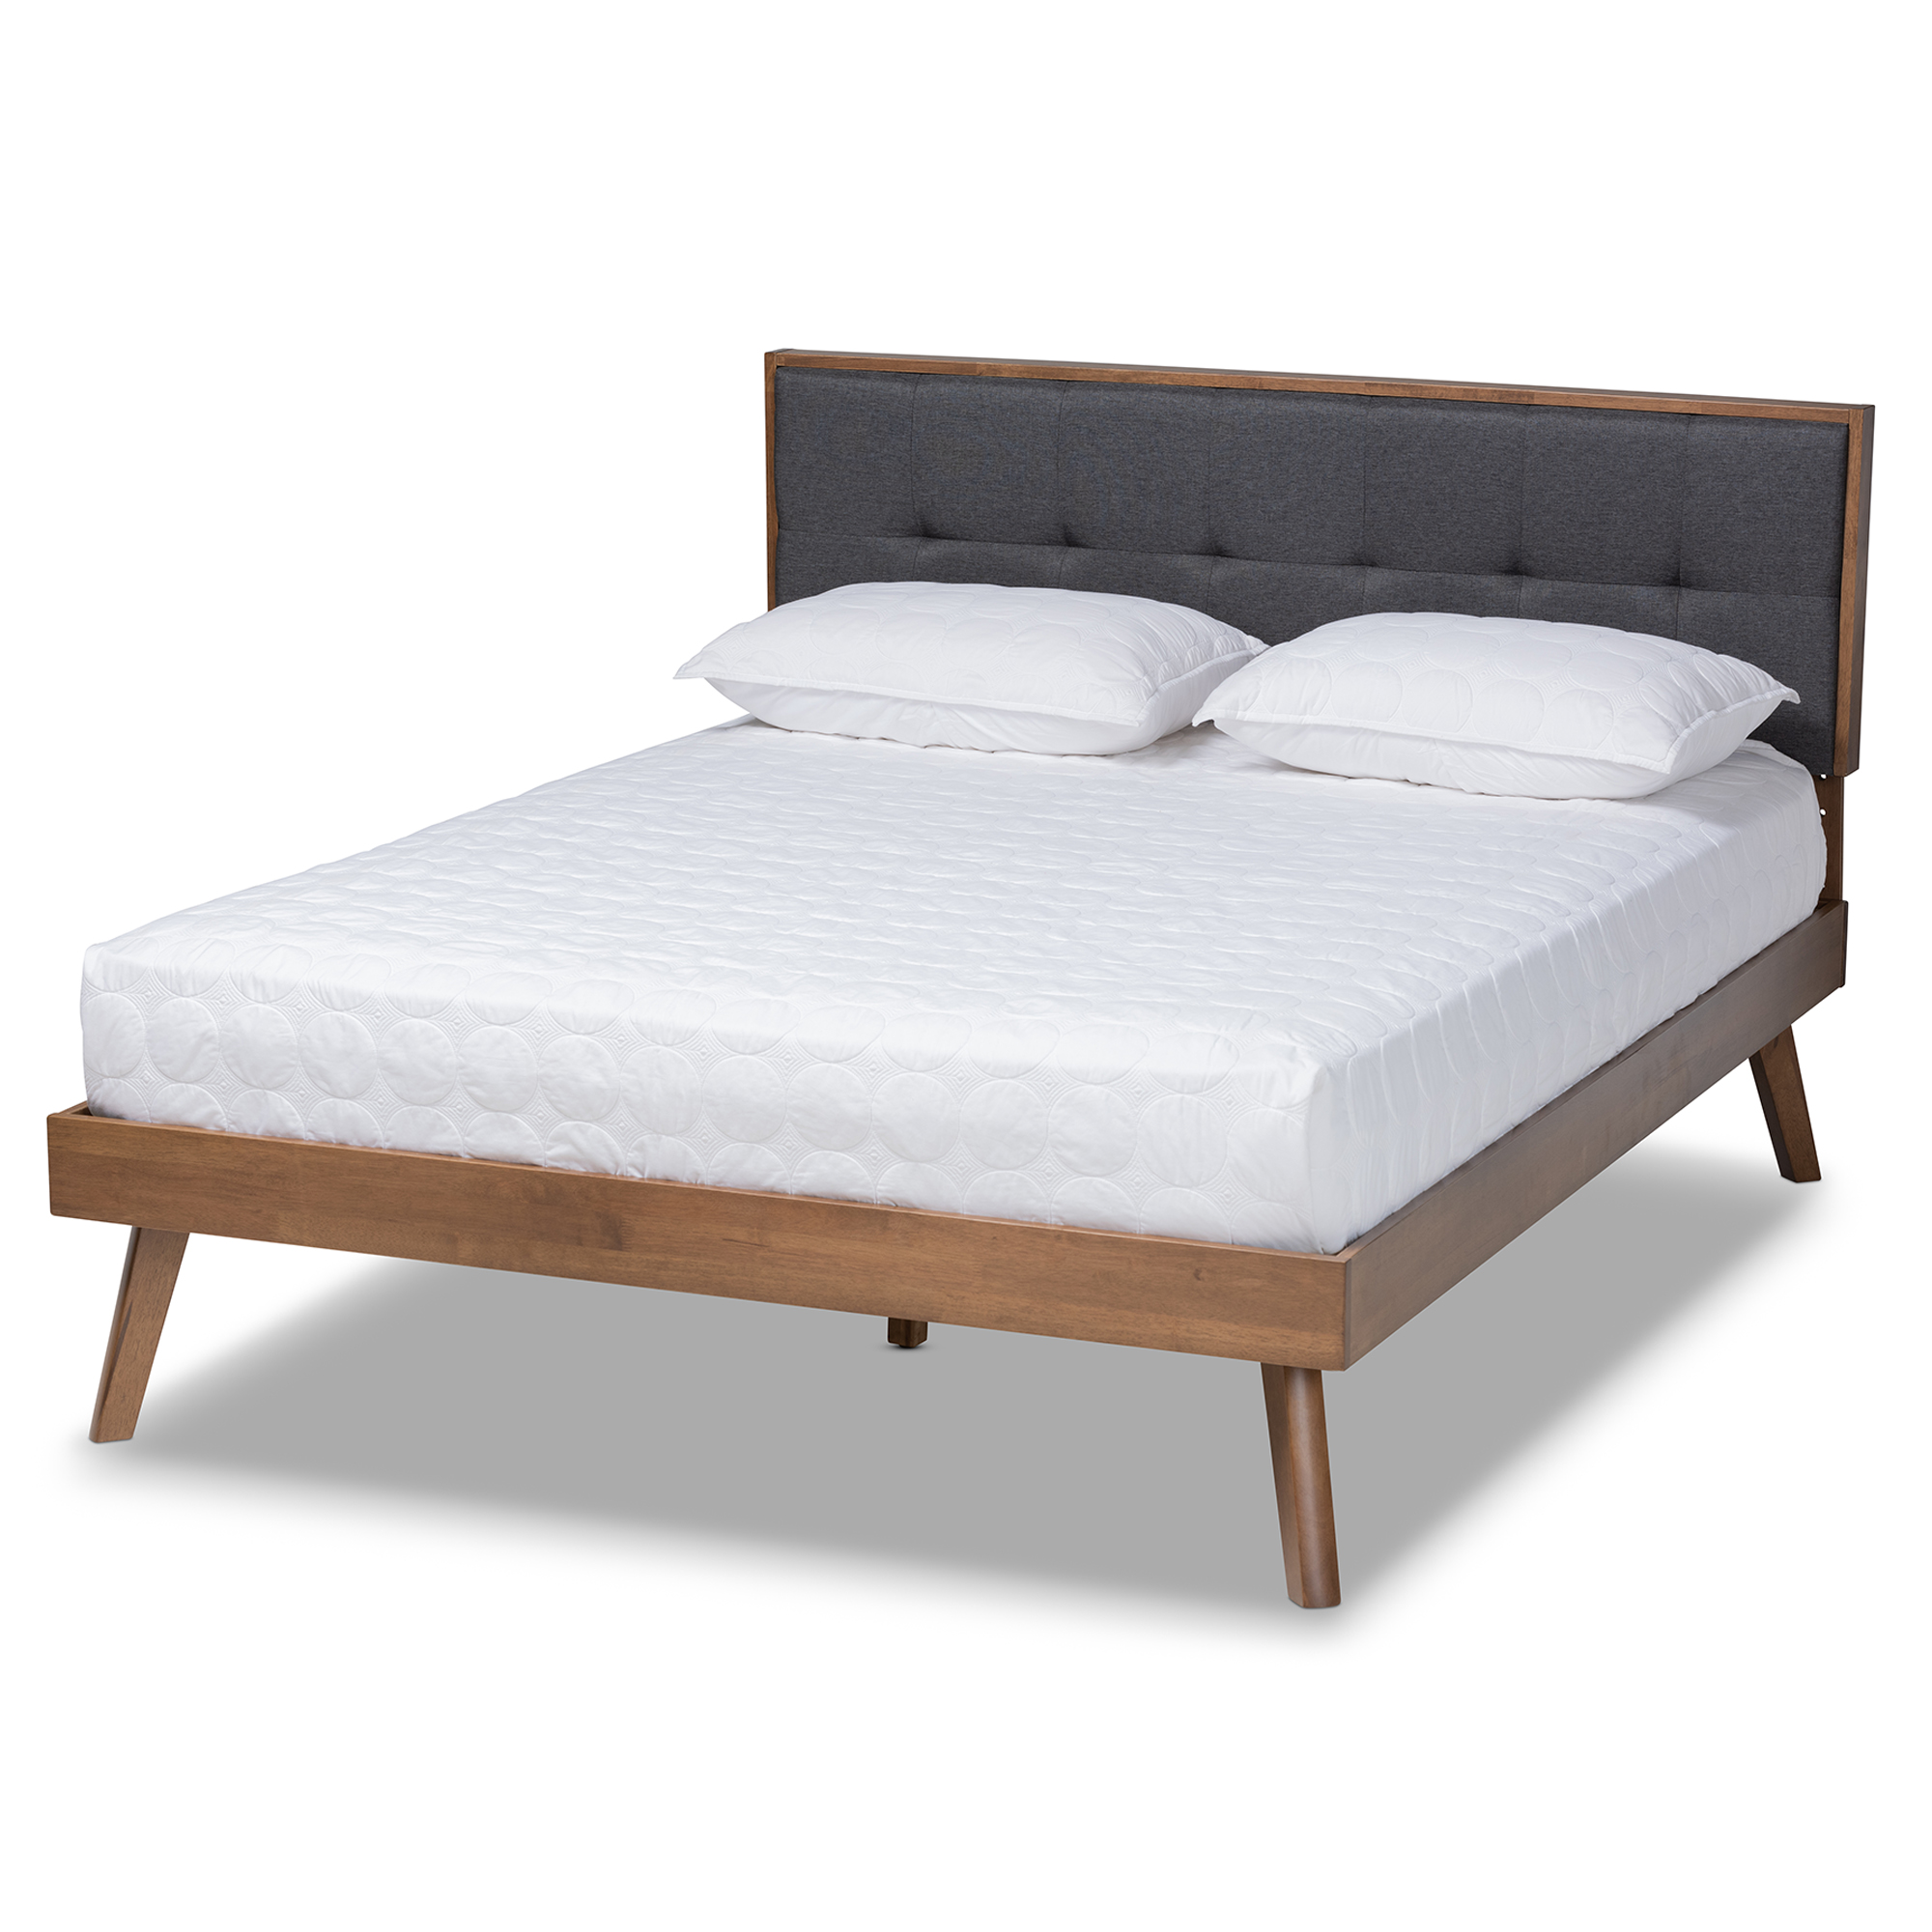 WoW | Mid-Century Platform Bed Frames | Enhance Your Bedroom